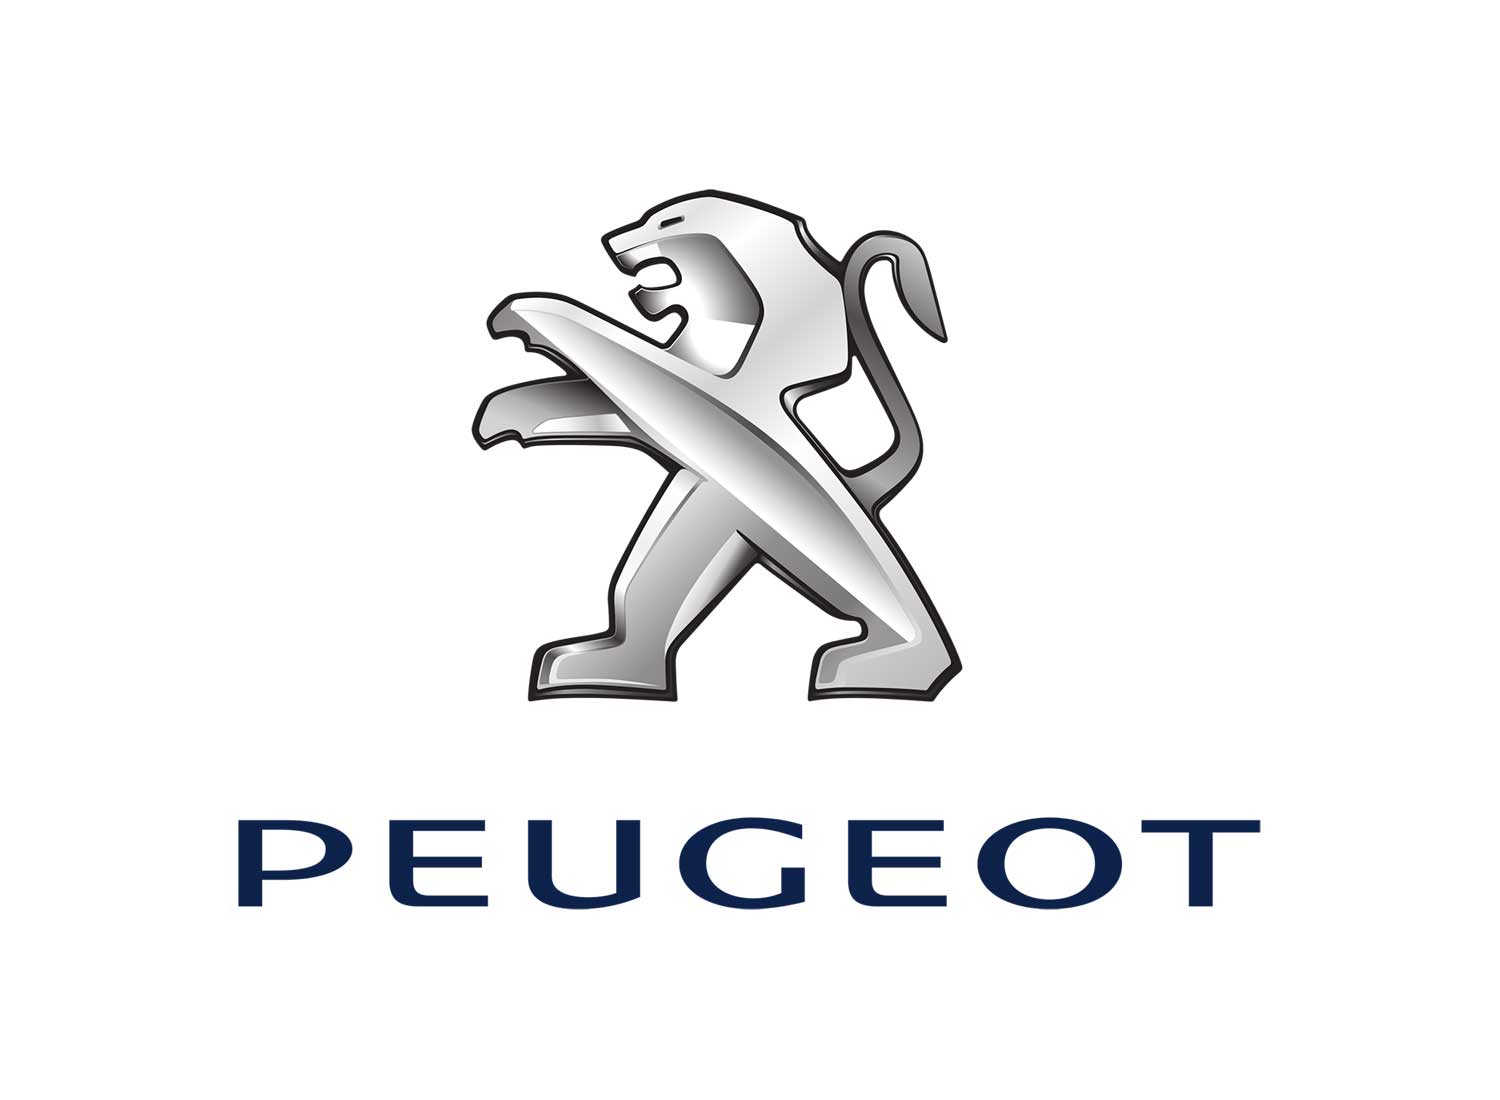 Peugeot logo - Before